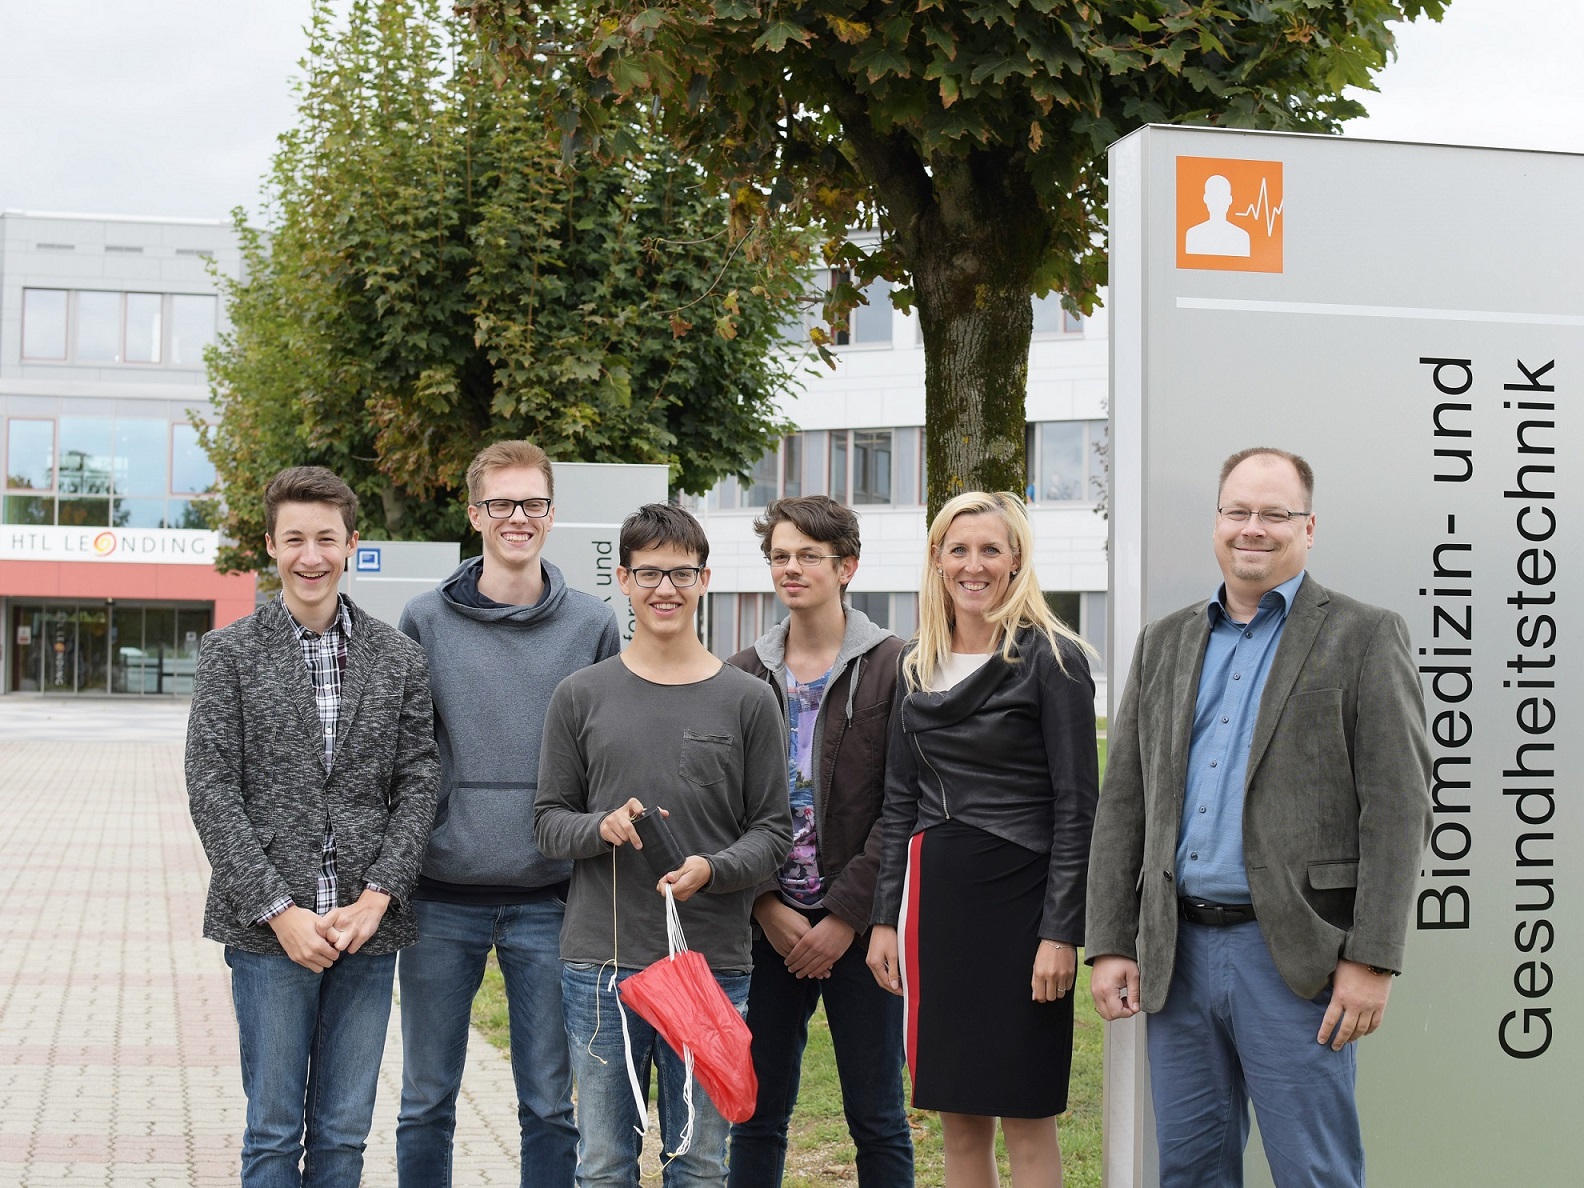 Team CanTaurus in front of the vocational school in Leonding, Austria